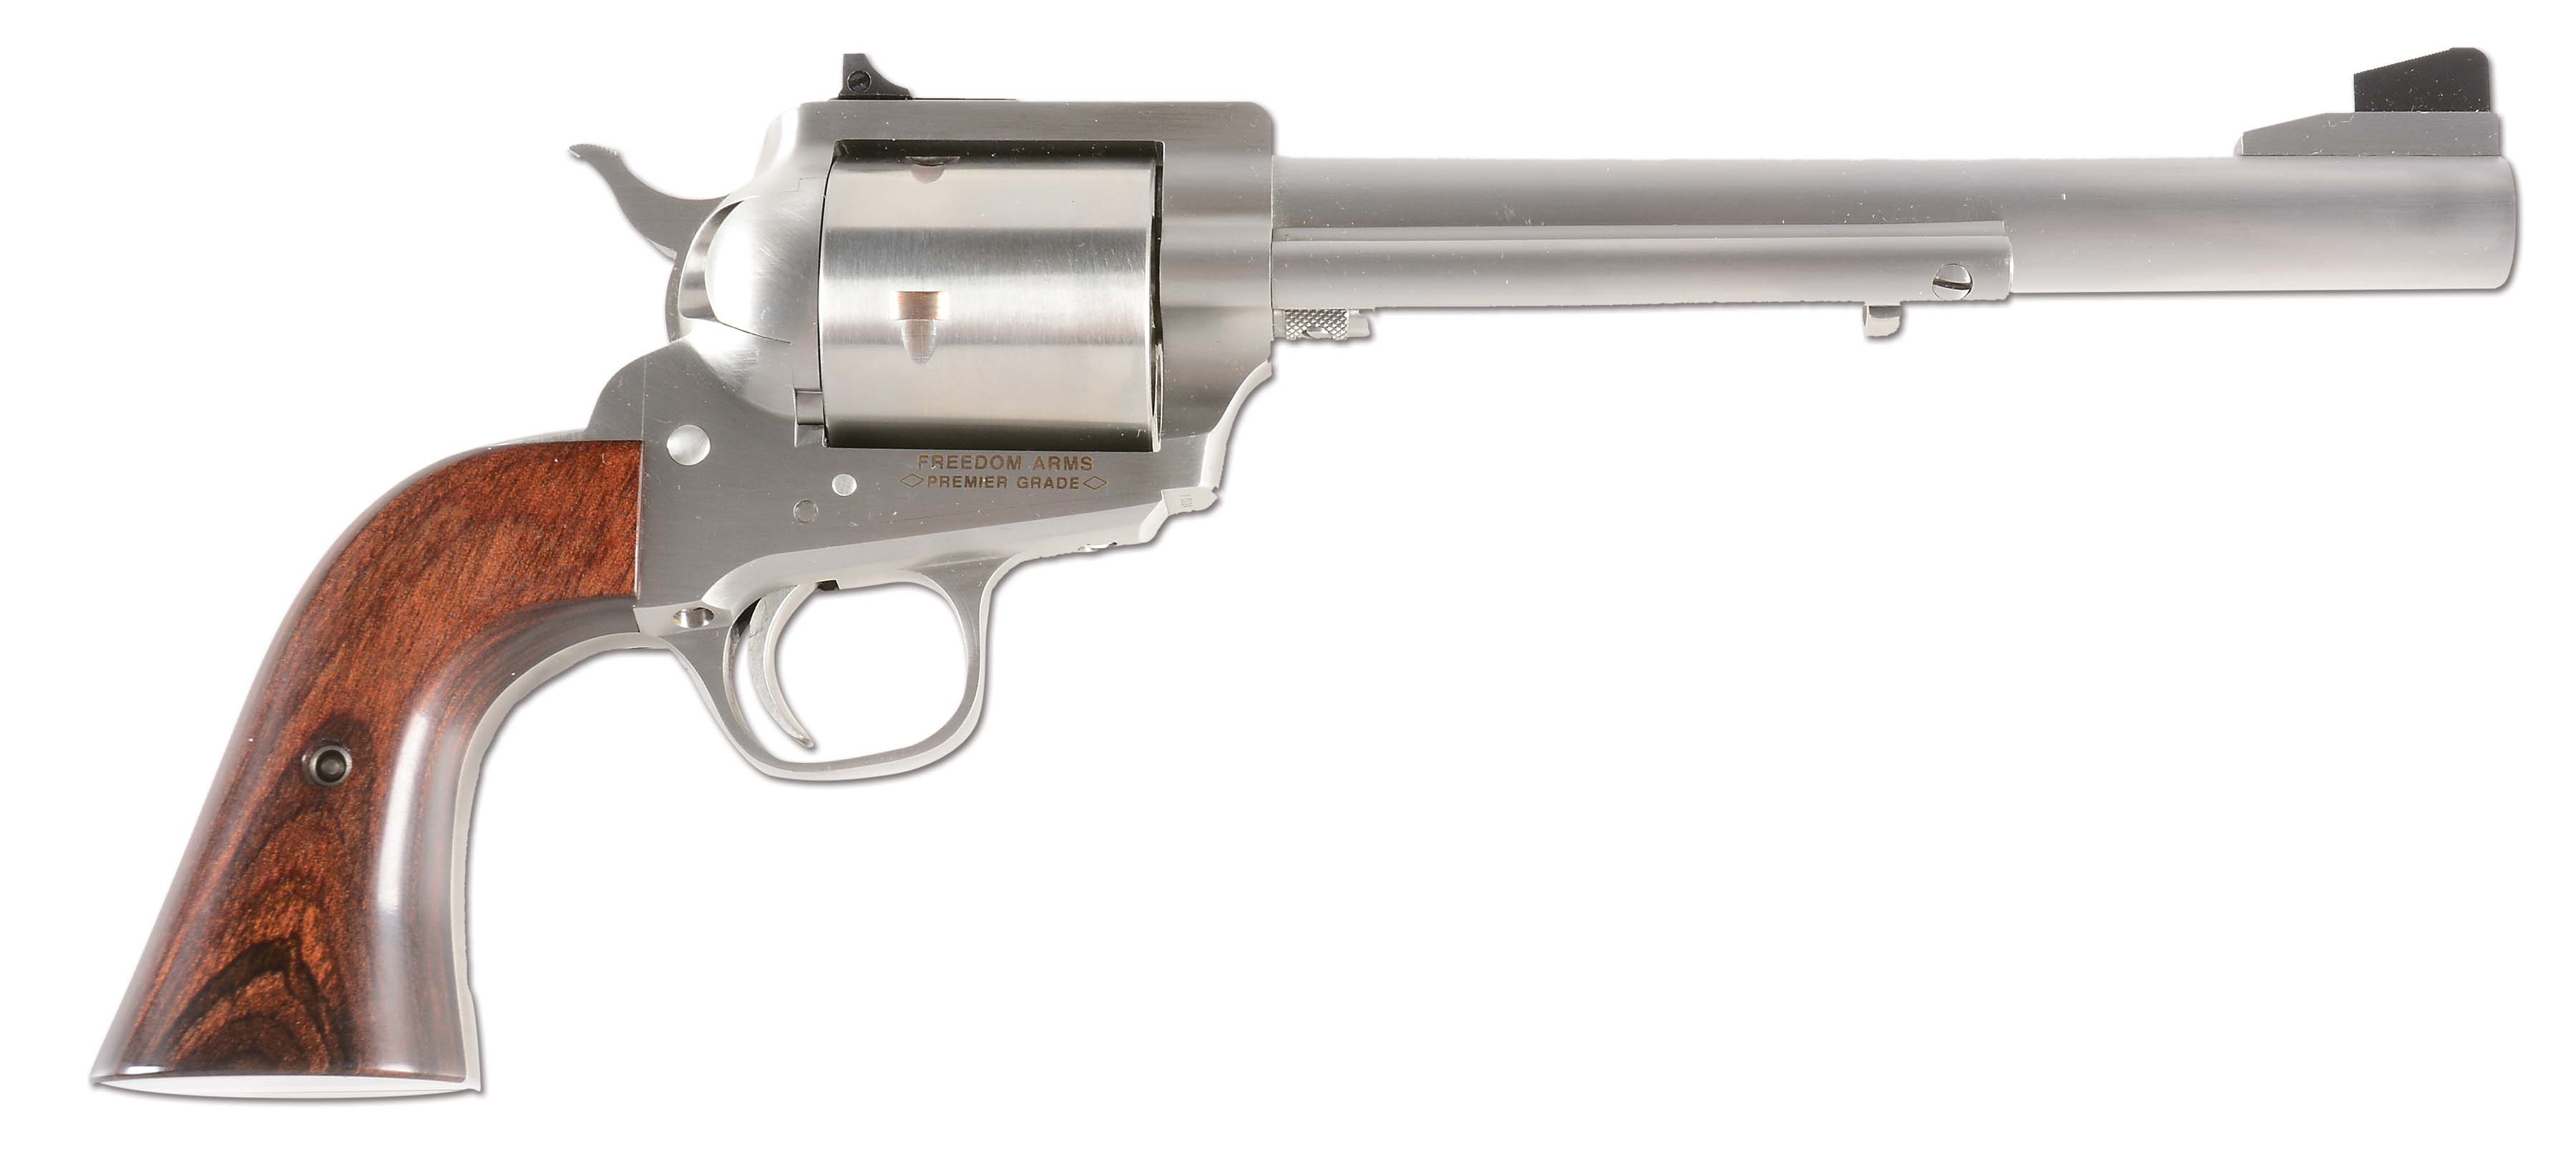 M) freedom arms model 555 premier grade single action .50AE revolver. 